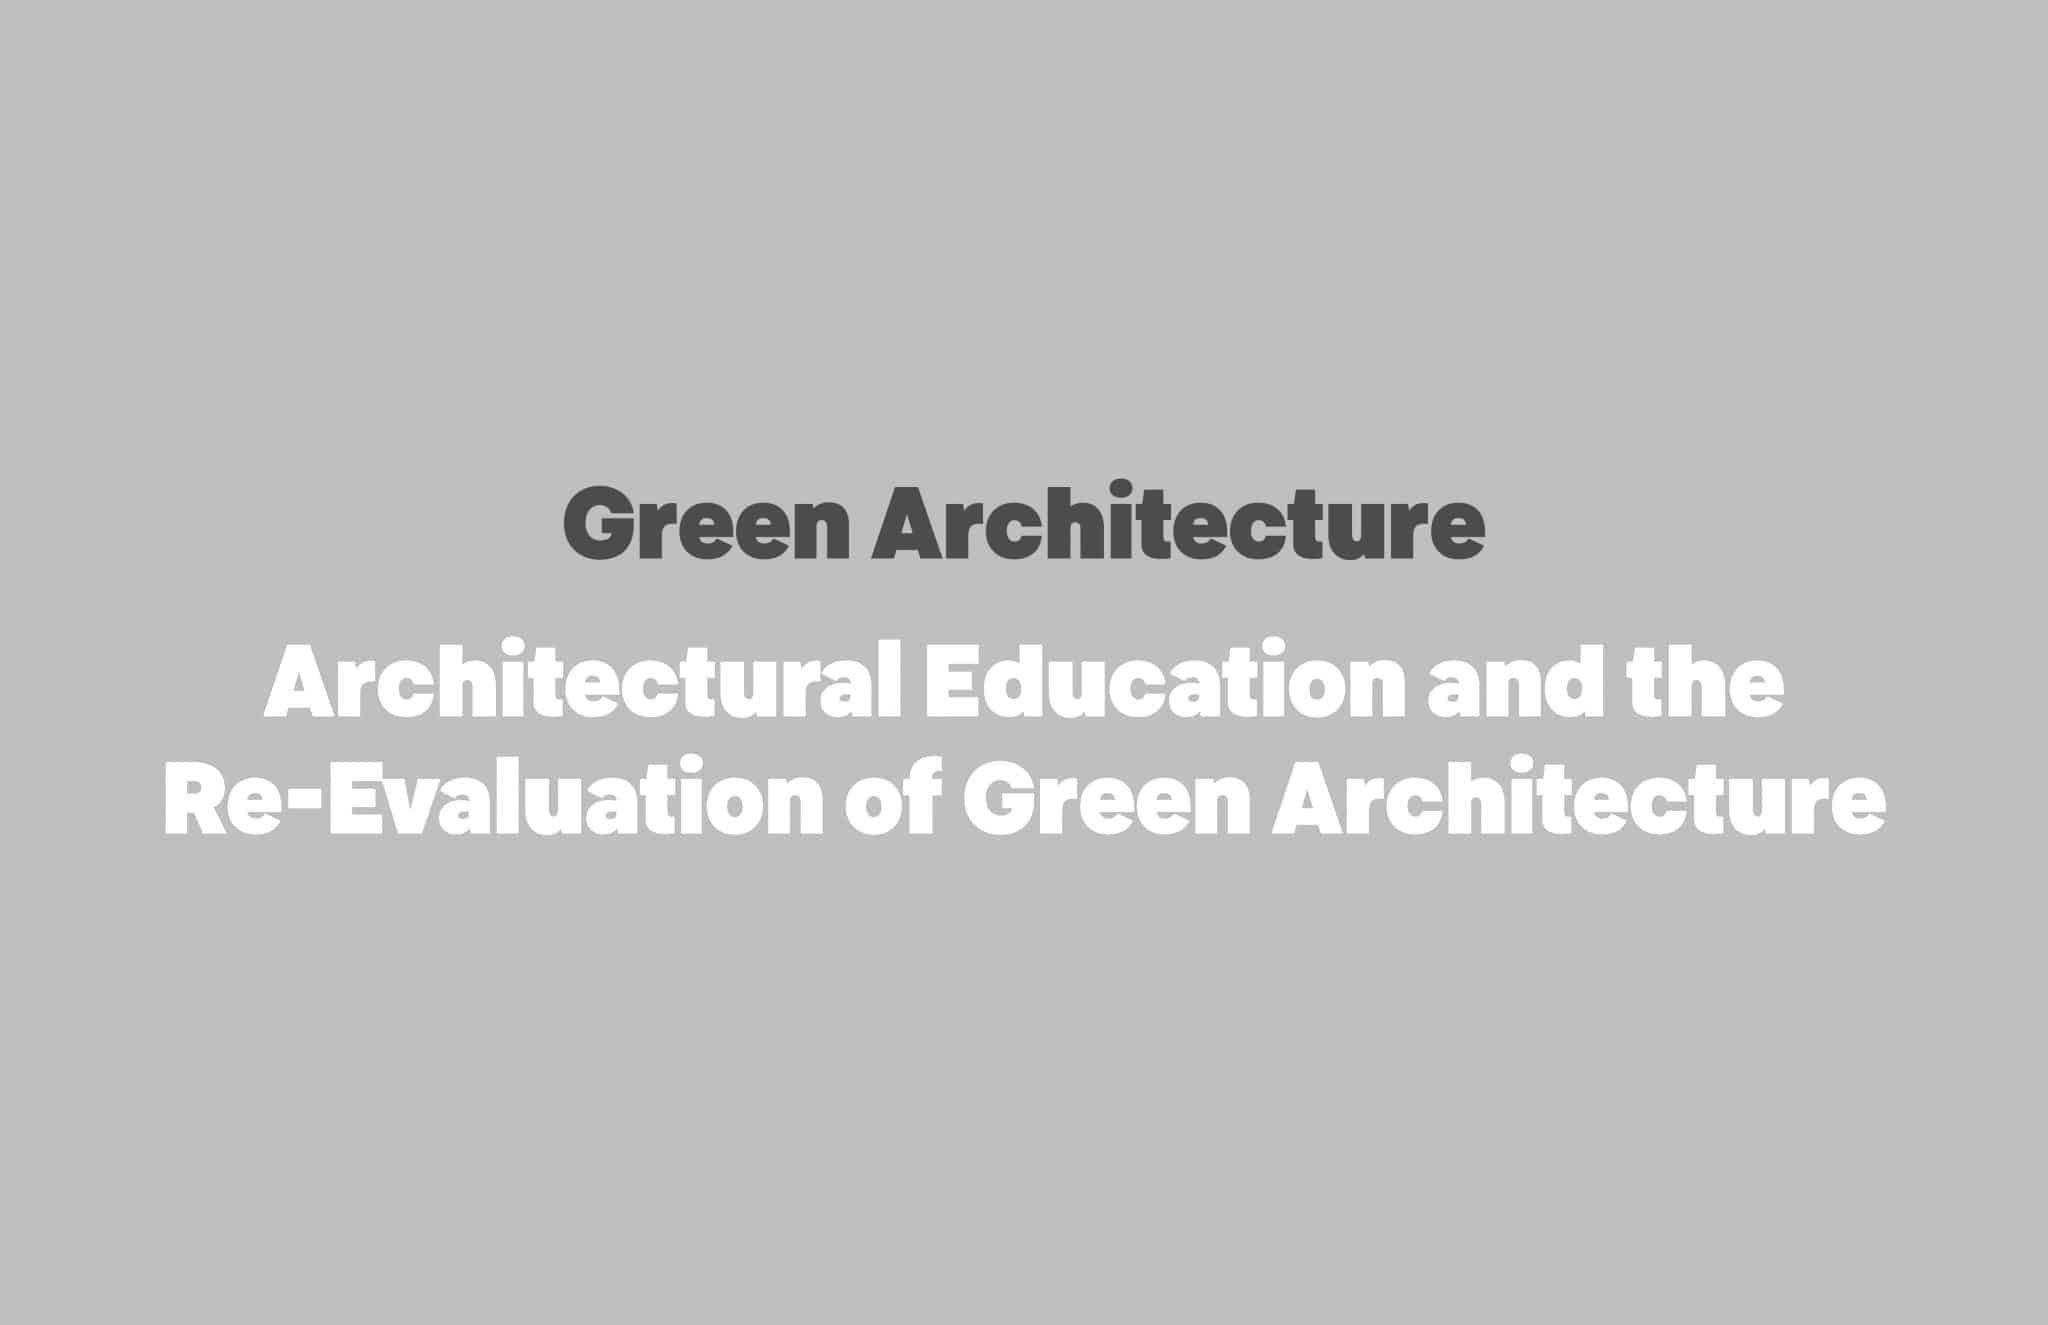   Green Architecture: Architecture Education,  Alexander Mayhew, University of Calgary 